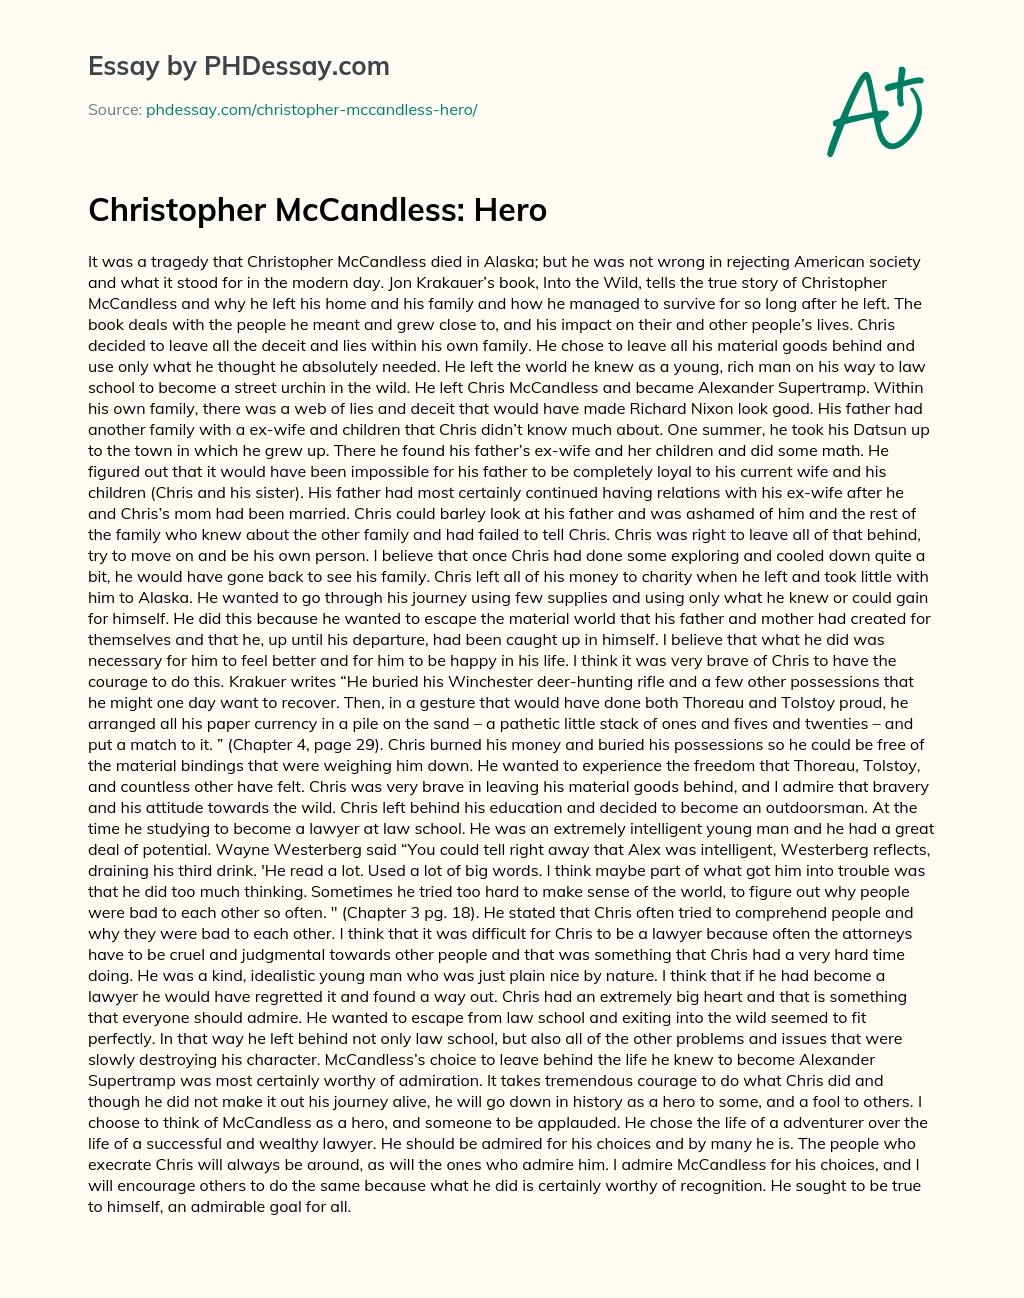 Christopher McCandless: Hero essay